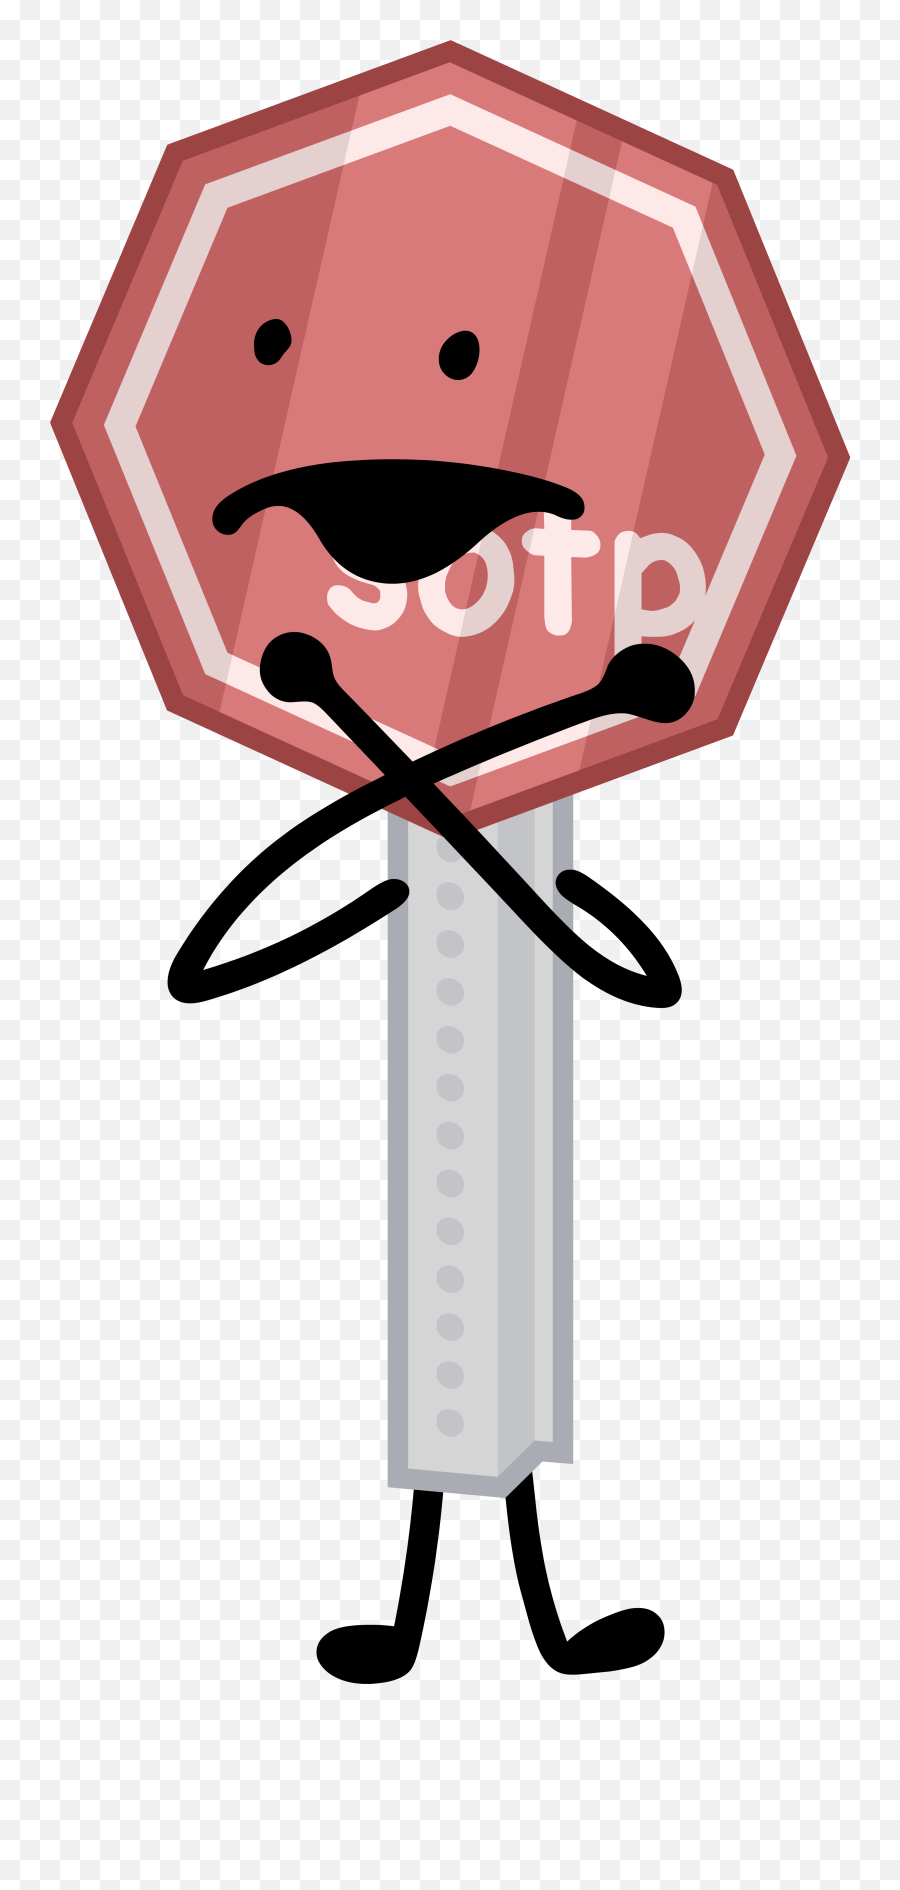 Sotp Sign - Bfb Stop Sign Body Emoji,Stop Sign Emoticon